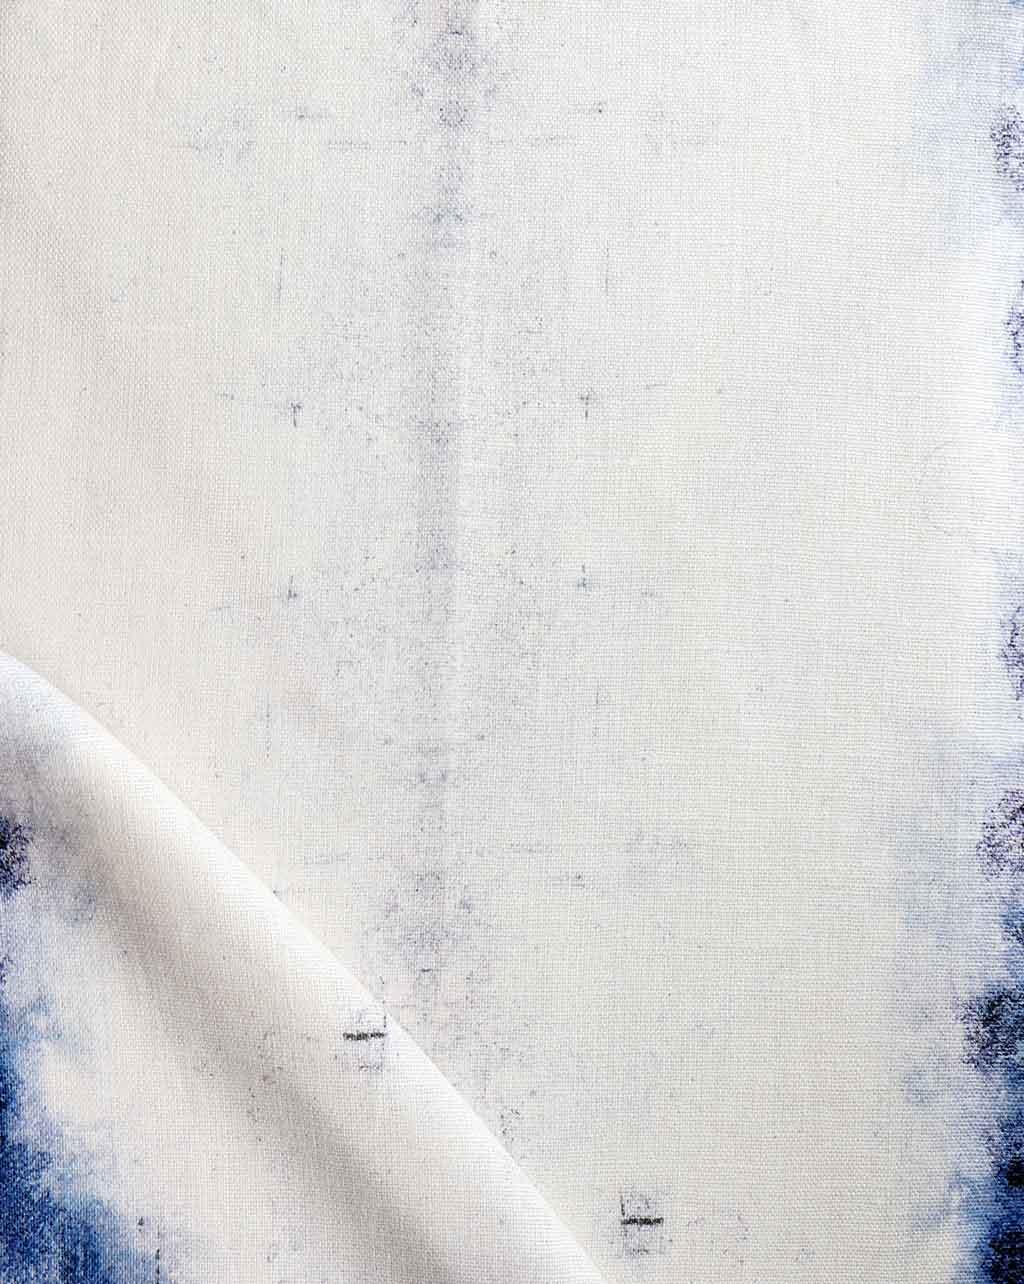 An image of an Aquarius Fabric||Indigo pattern.